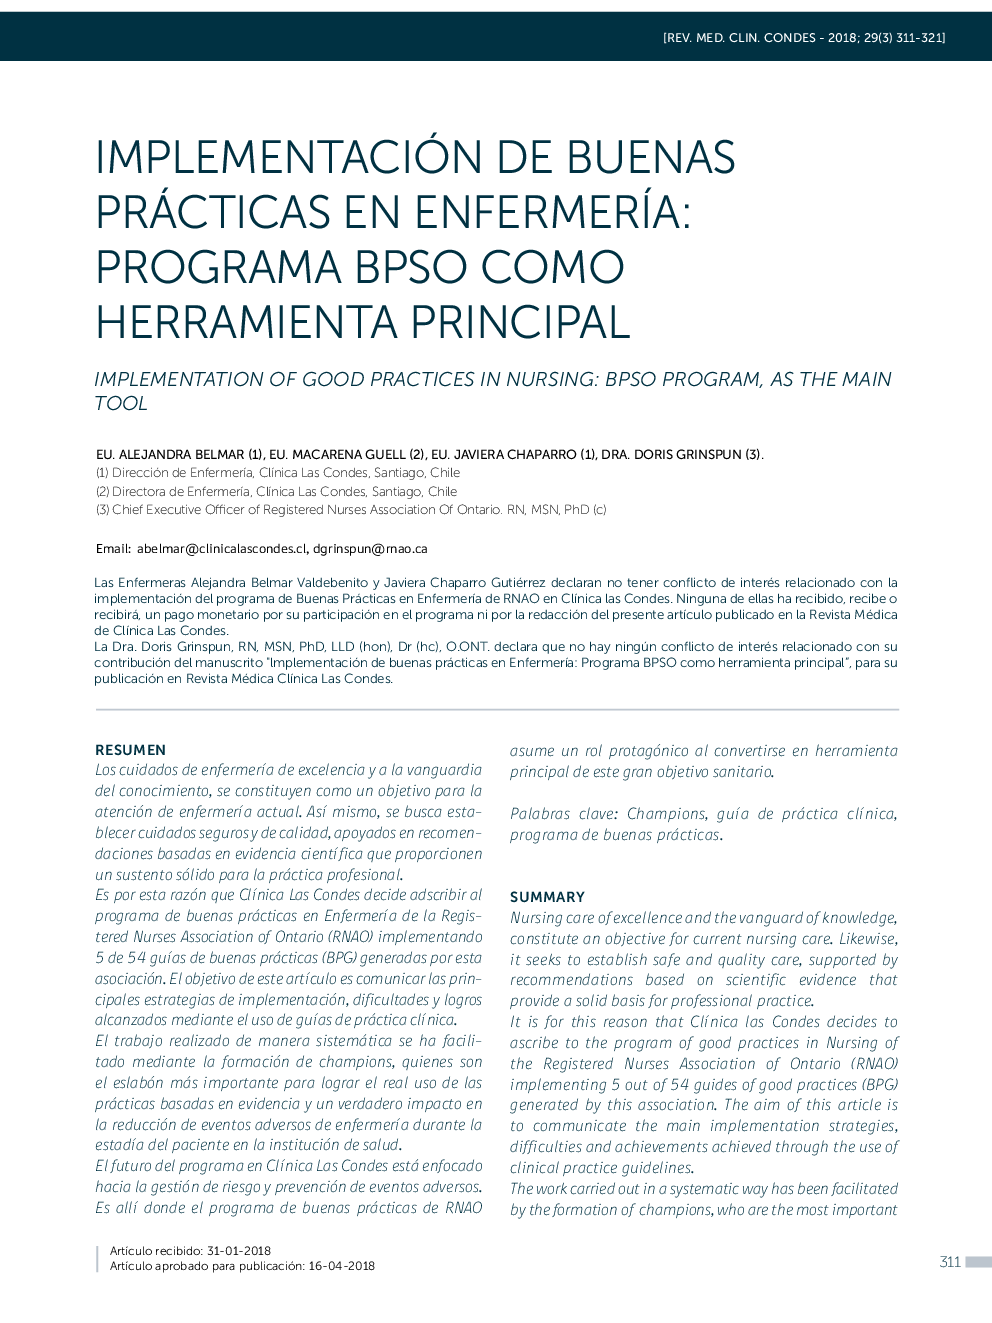 IMPLEMENTACIÃN DE BUENAS PRÁCTICAS EN ENFERMERÍA: PROGRAMA BPSO COMO HERRAMIENTA PRINCIPAL